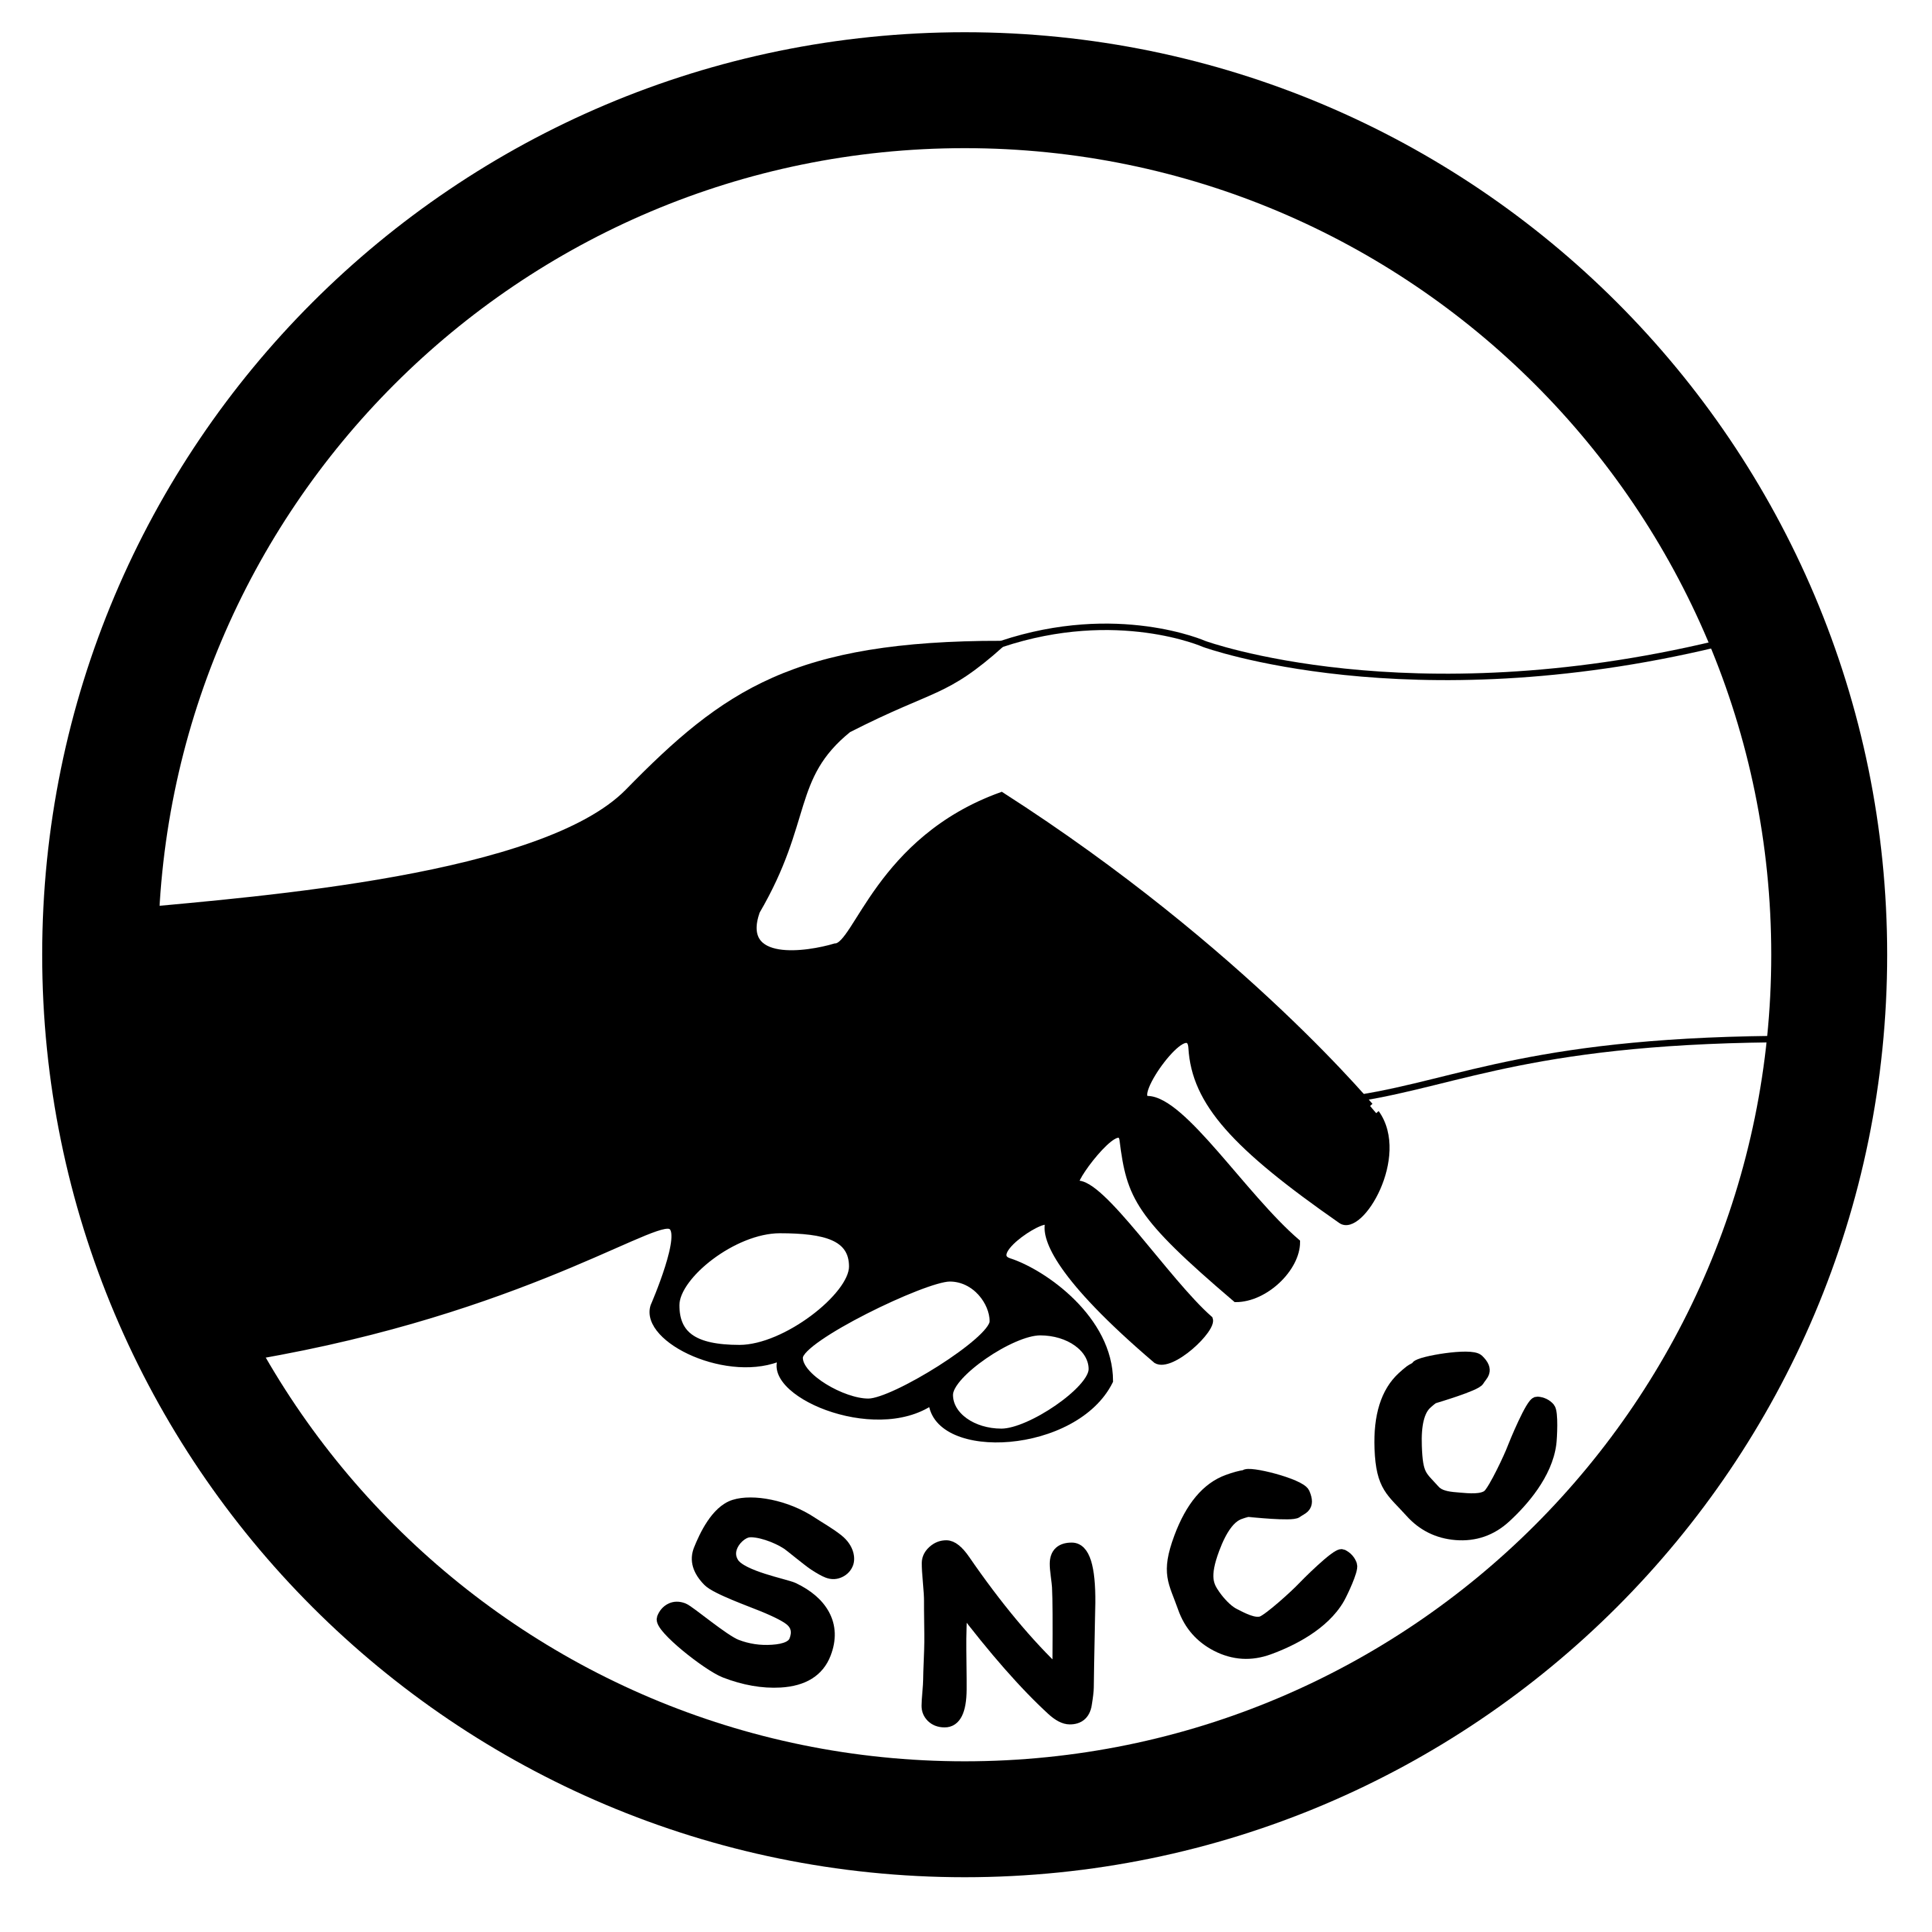 SNCC logo